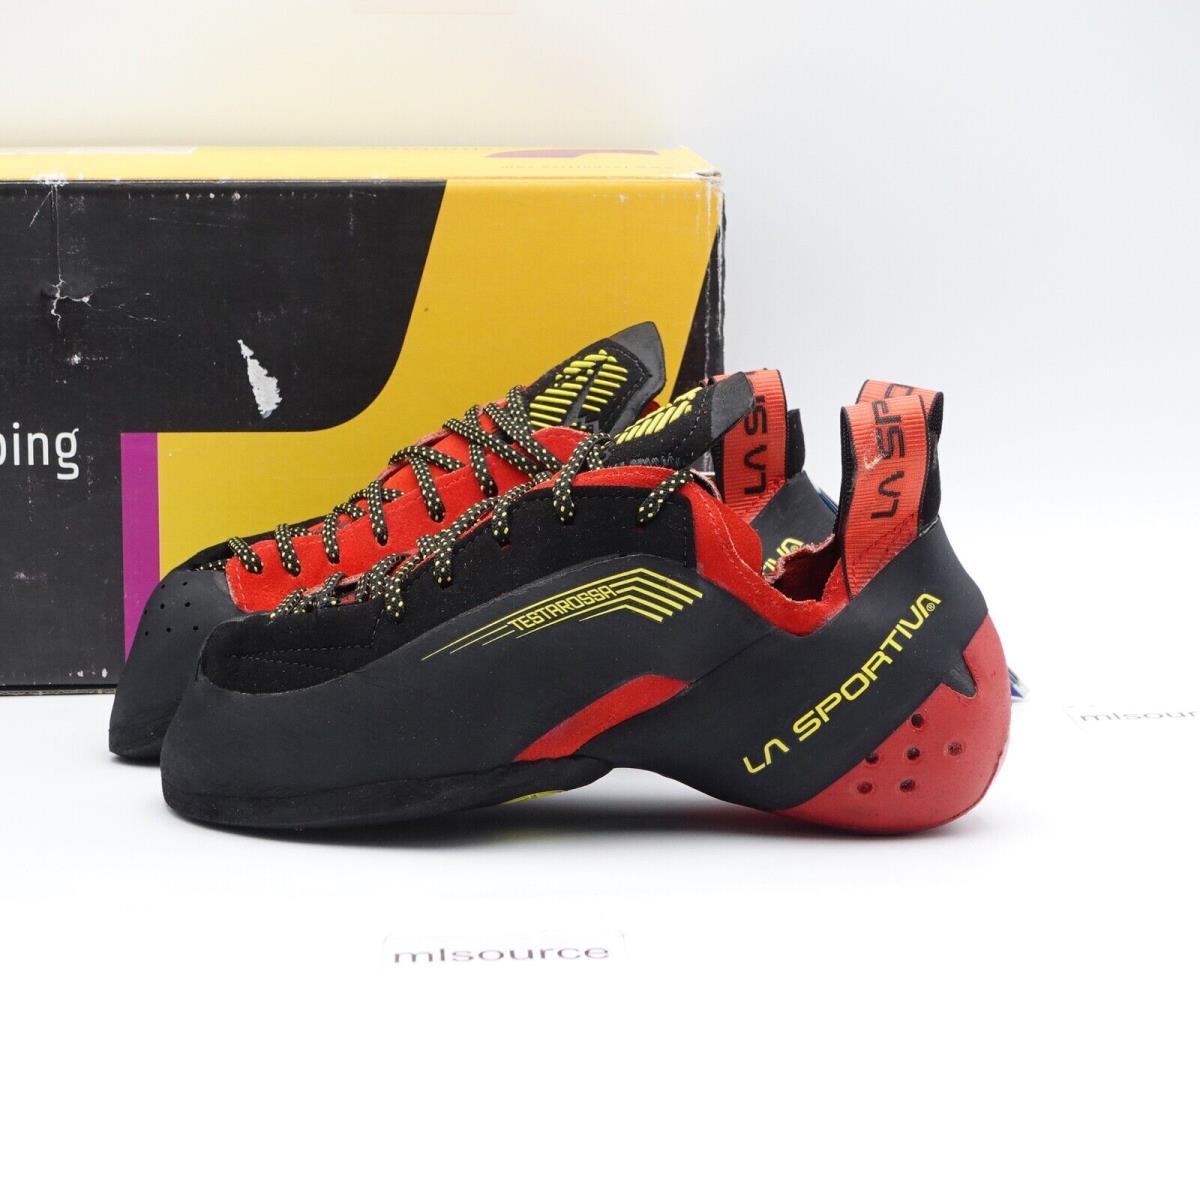 Size 7.5 / 39 EU Women`s La Sportiva Testarossa Climbing Shoes 20U300999 Red